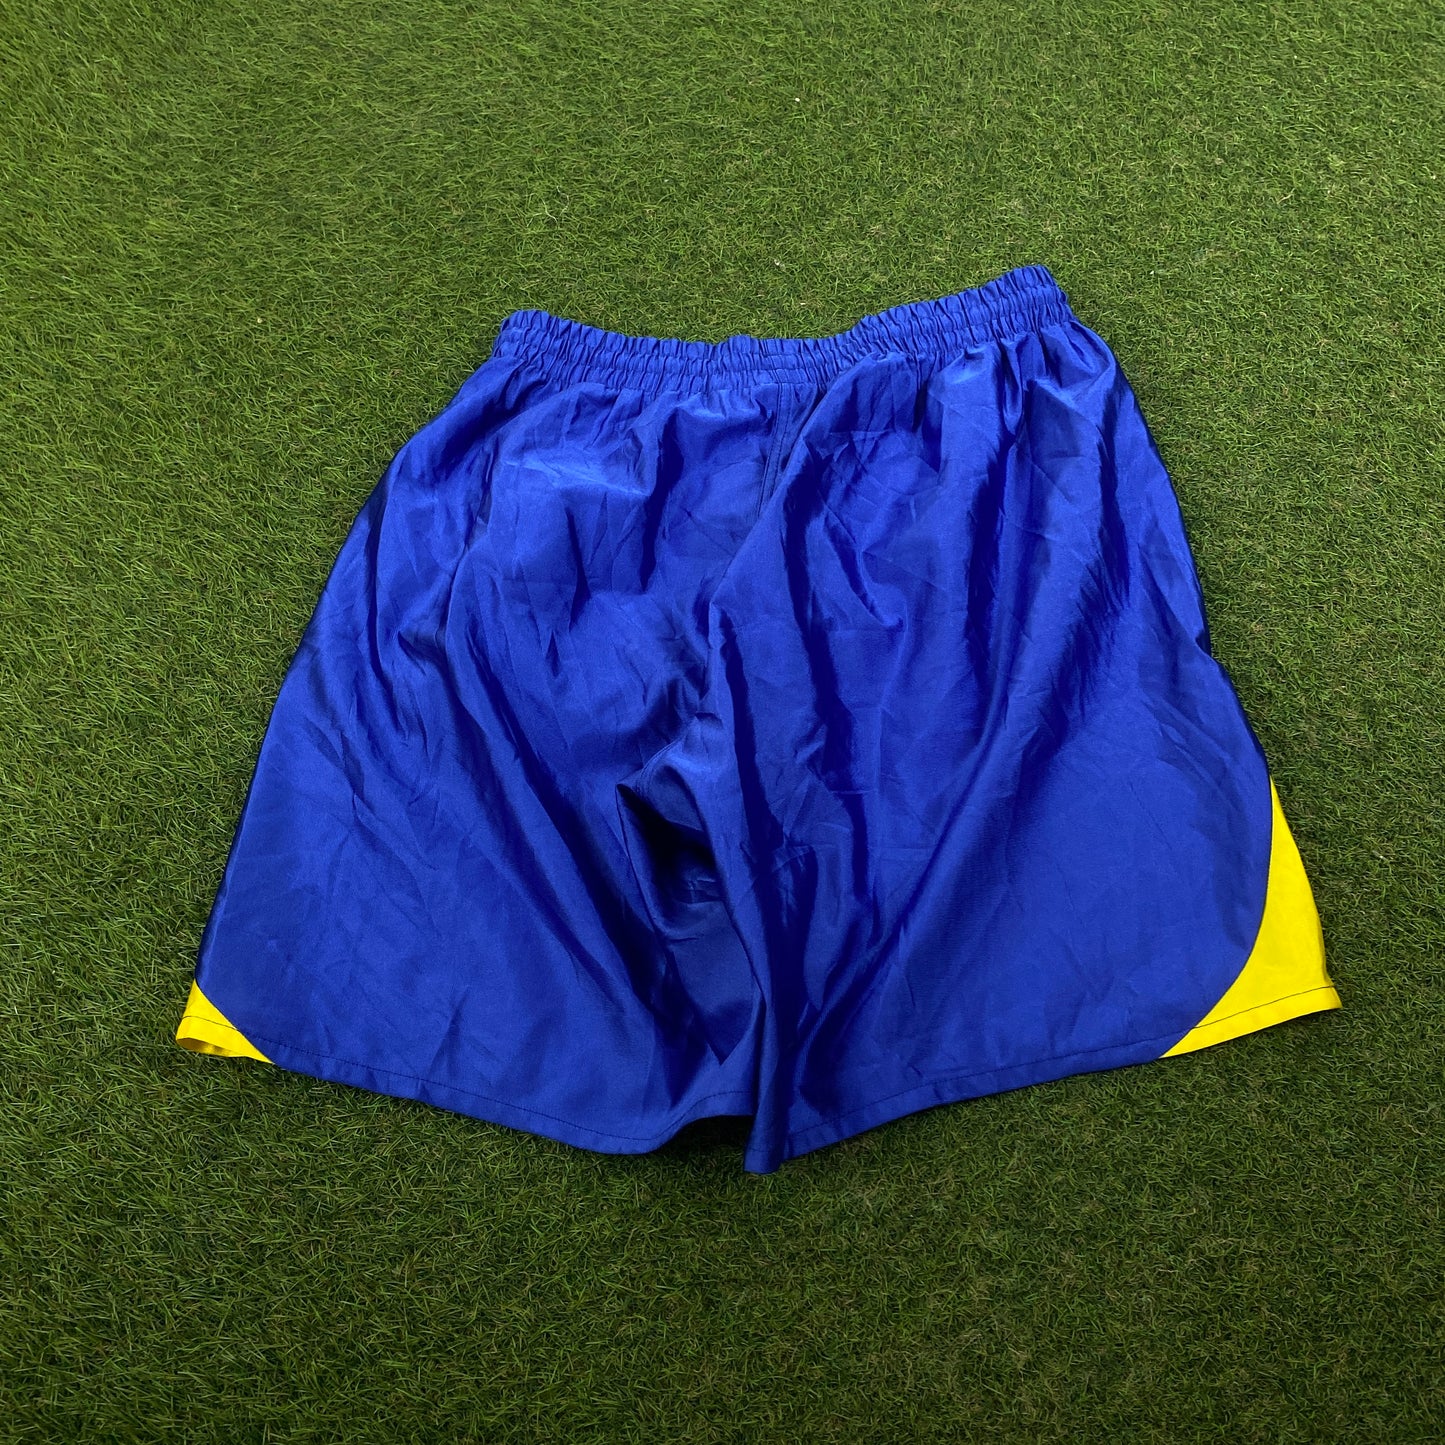 Retro Umbro Sweden Football Shorts Blue Medium